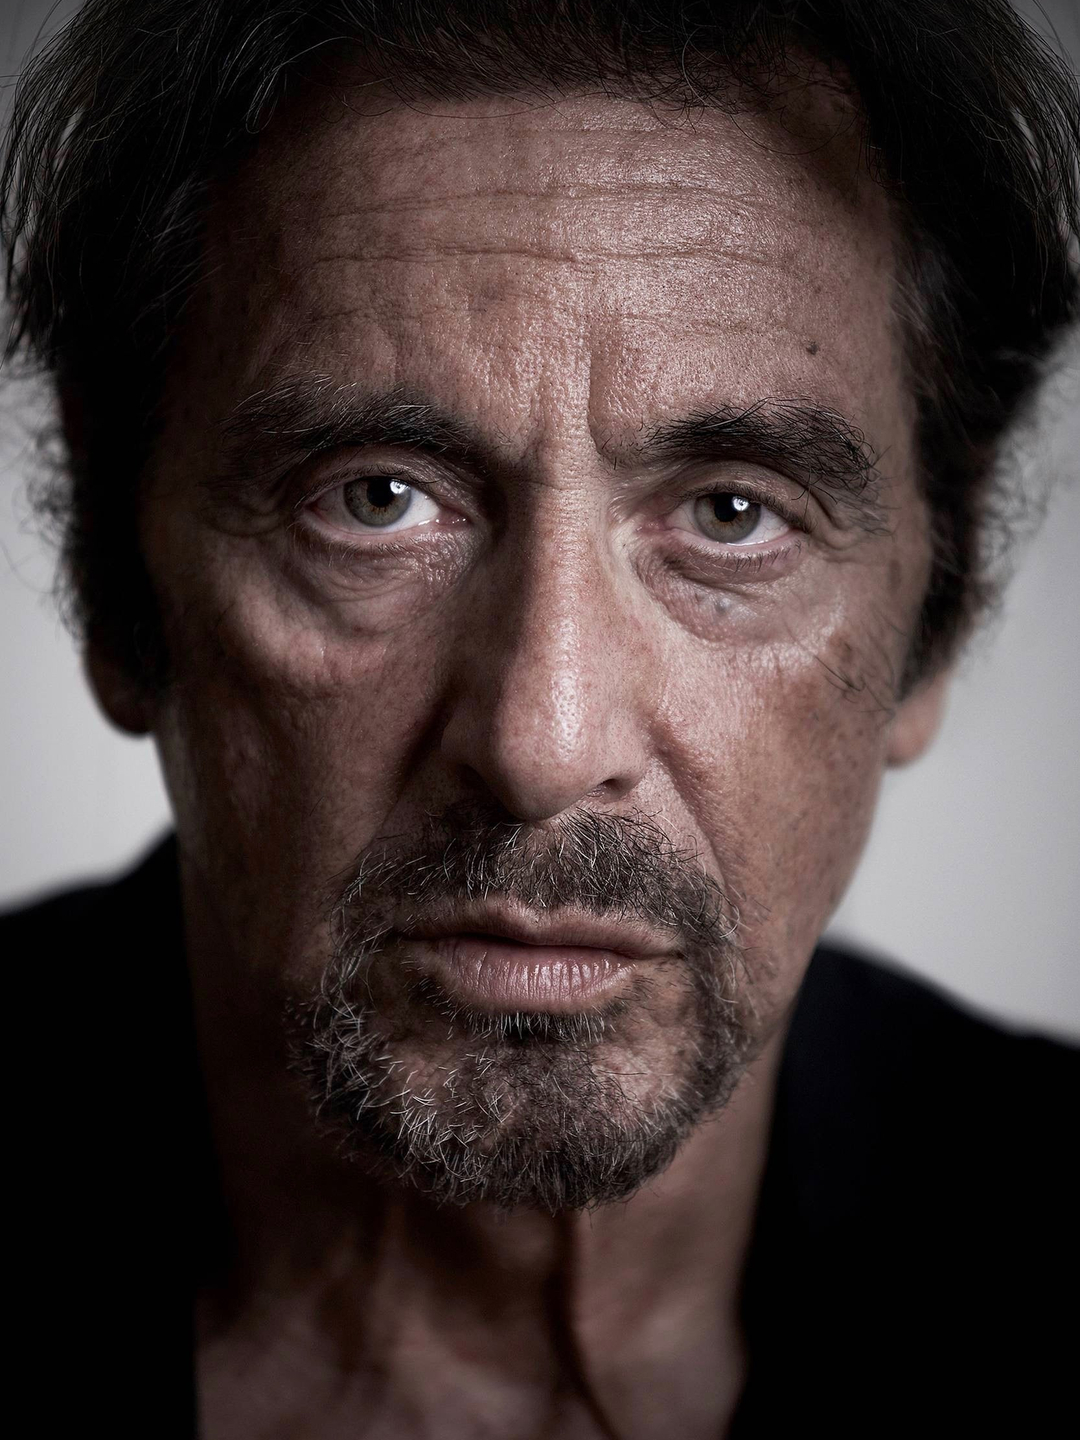 Al Pacino main achievements